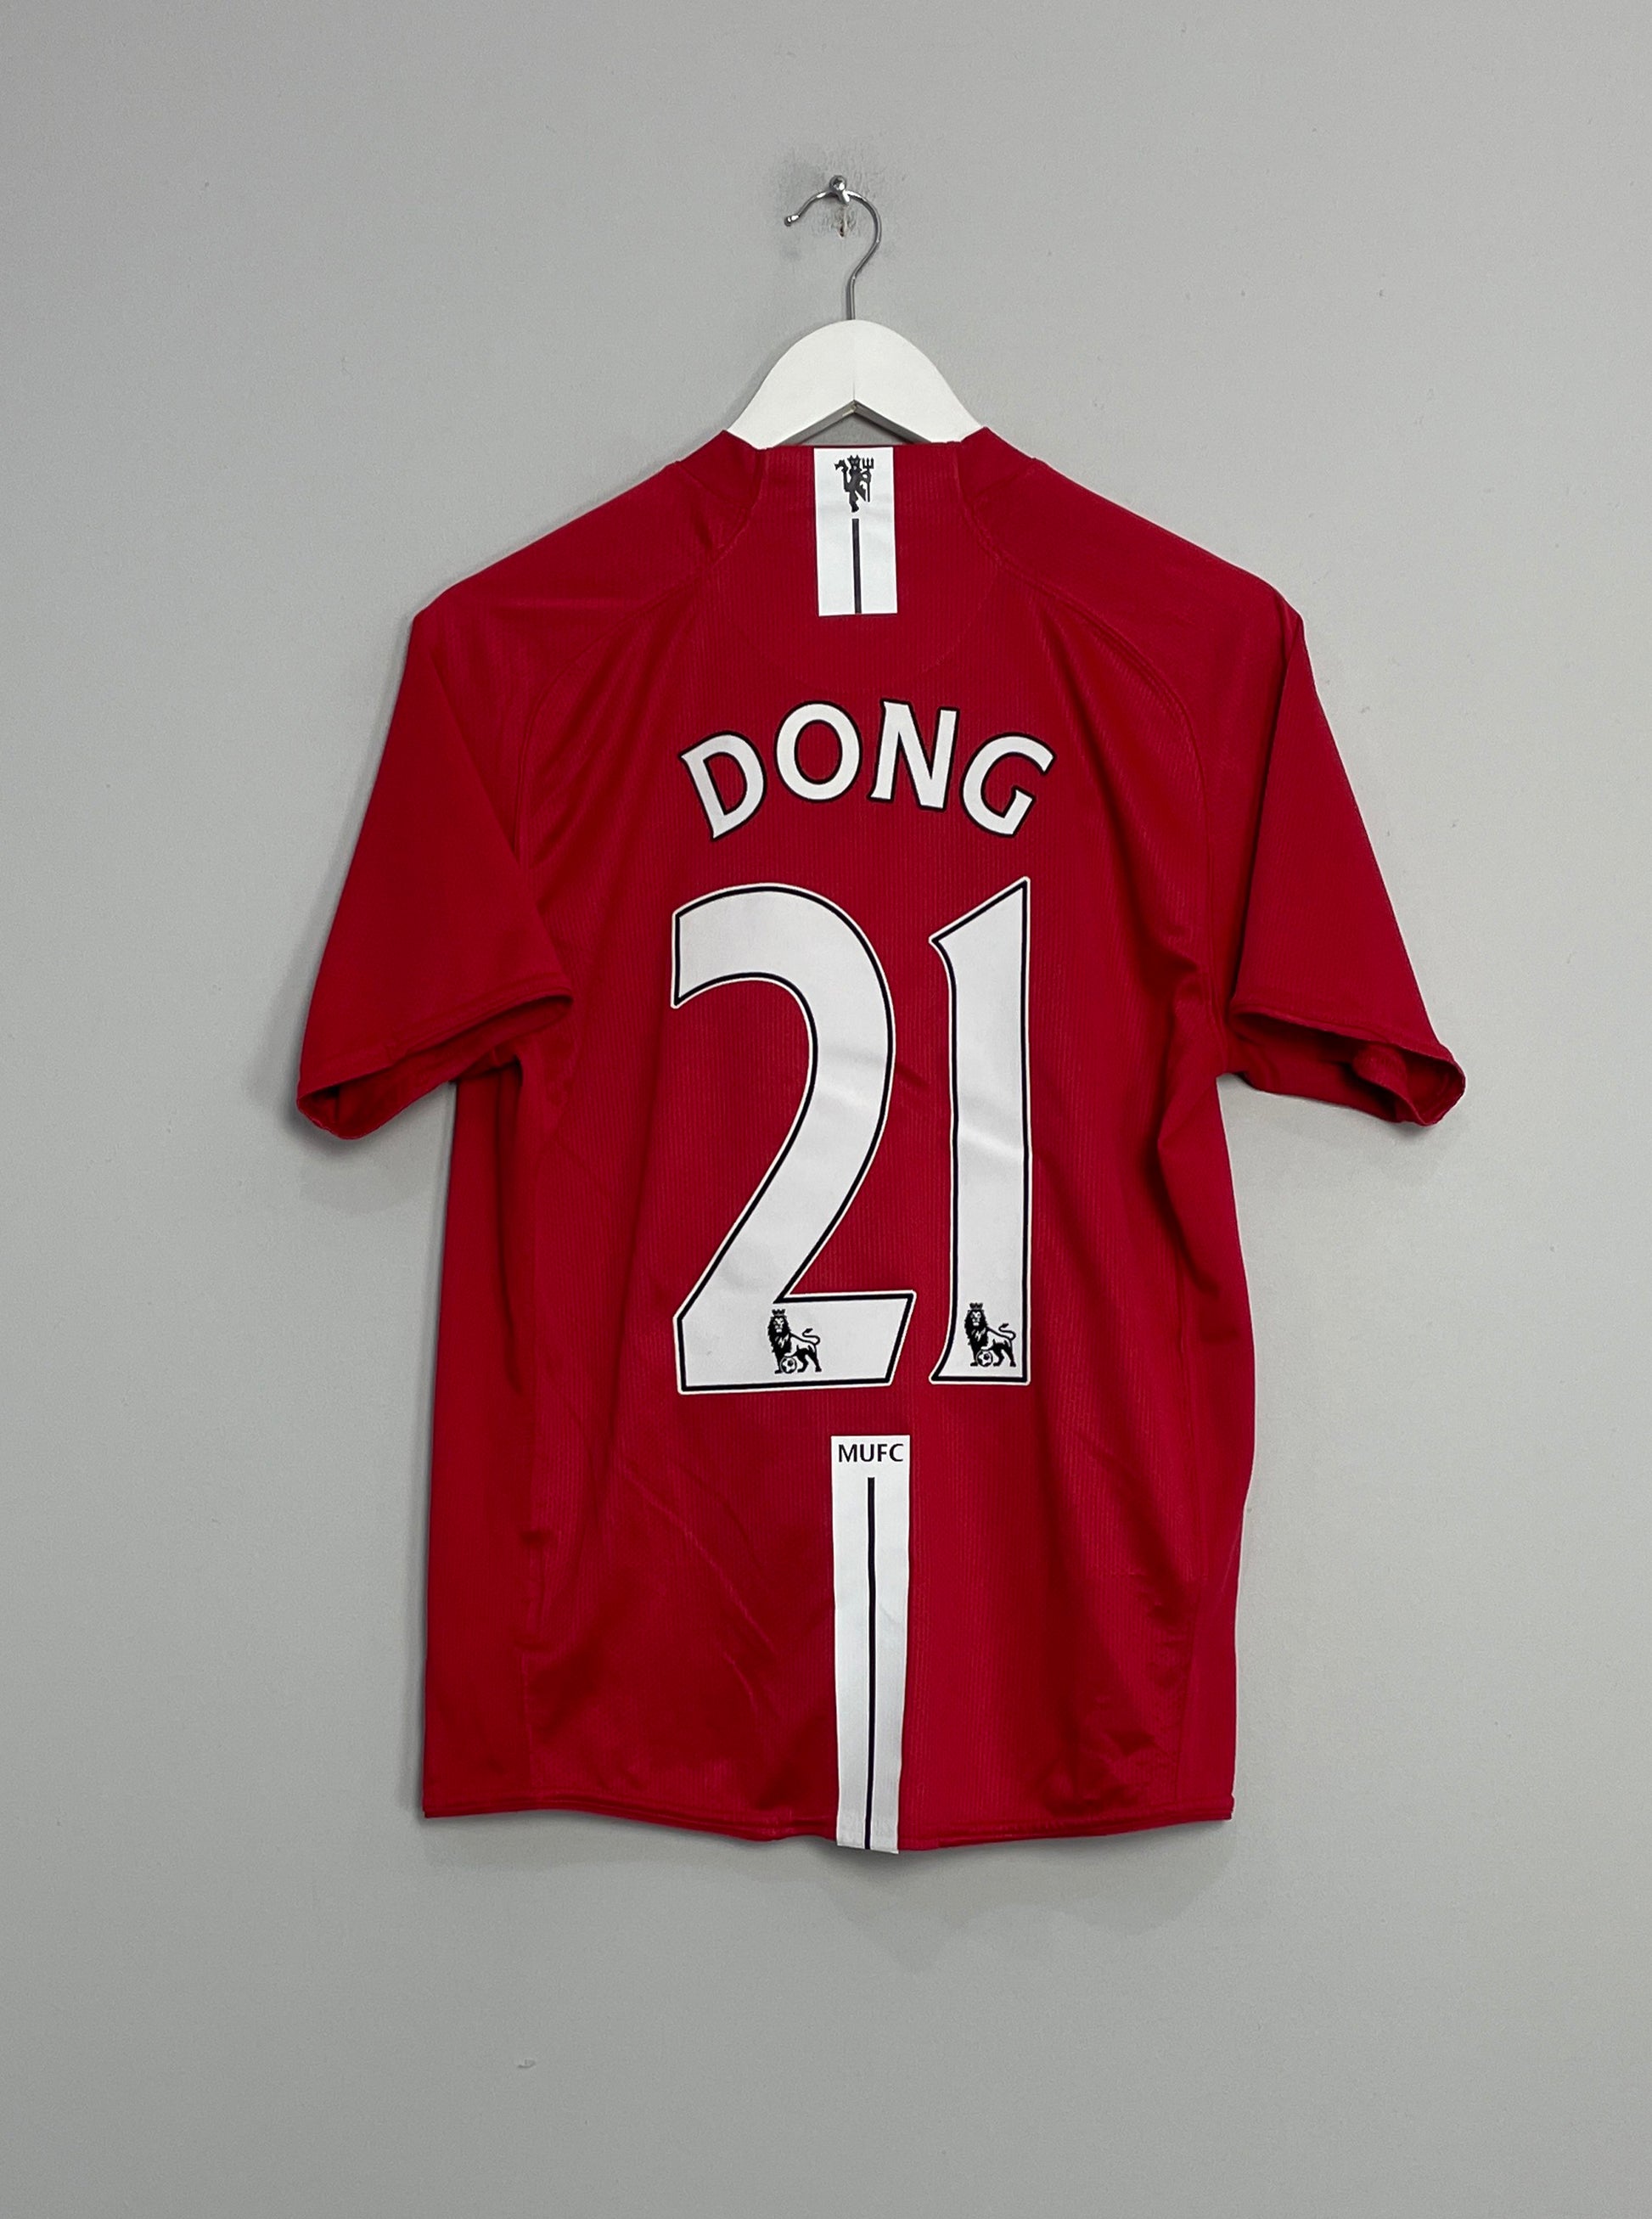 2007/08 Man Utd Football Training Shirt / Old Vintage Nike Soccer Jersey